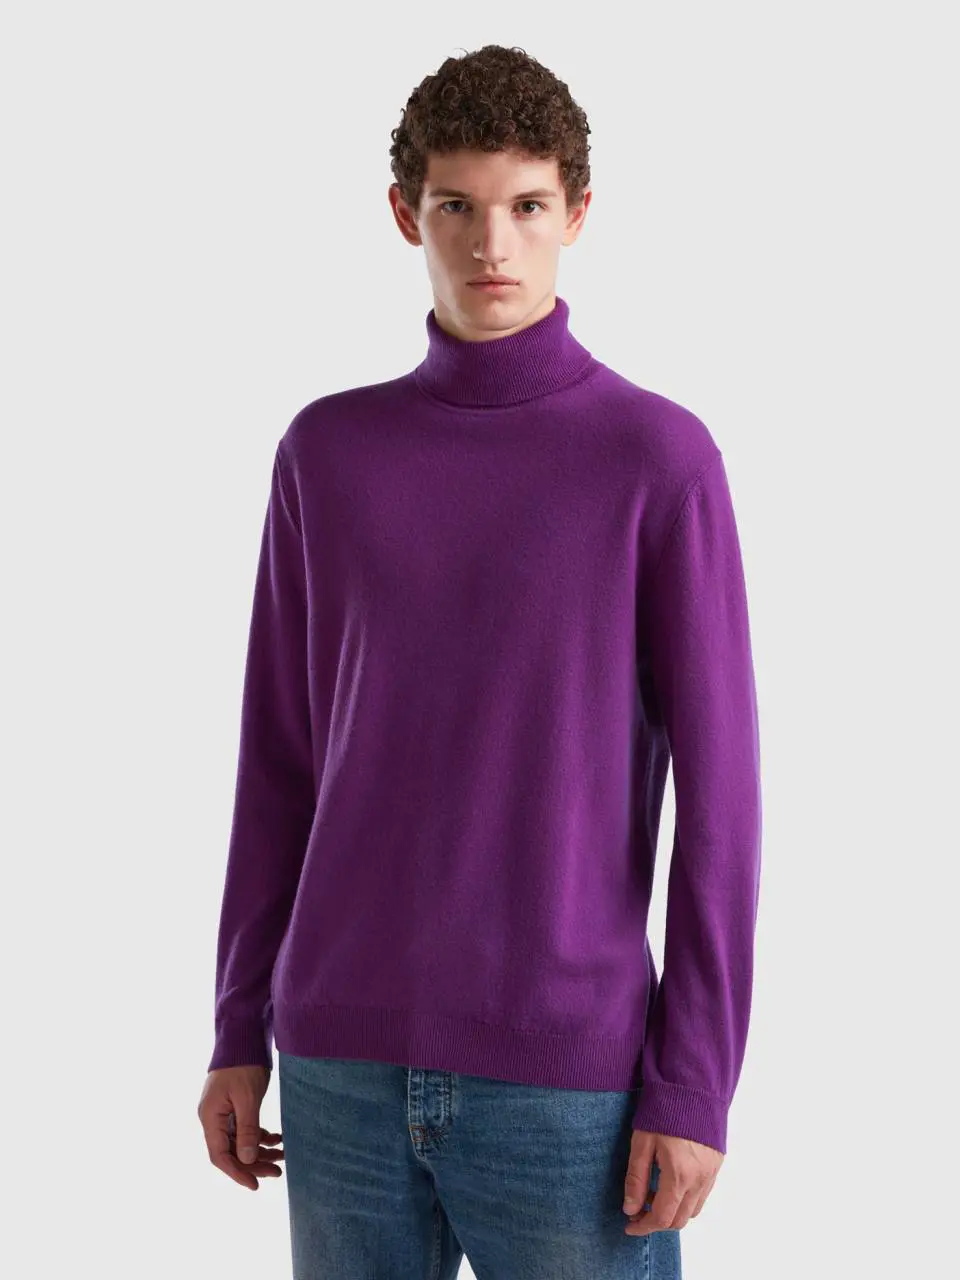 Benetton purple turtleneck in pure merino wool. 1